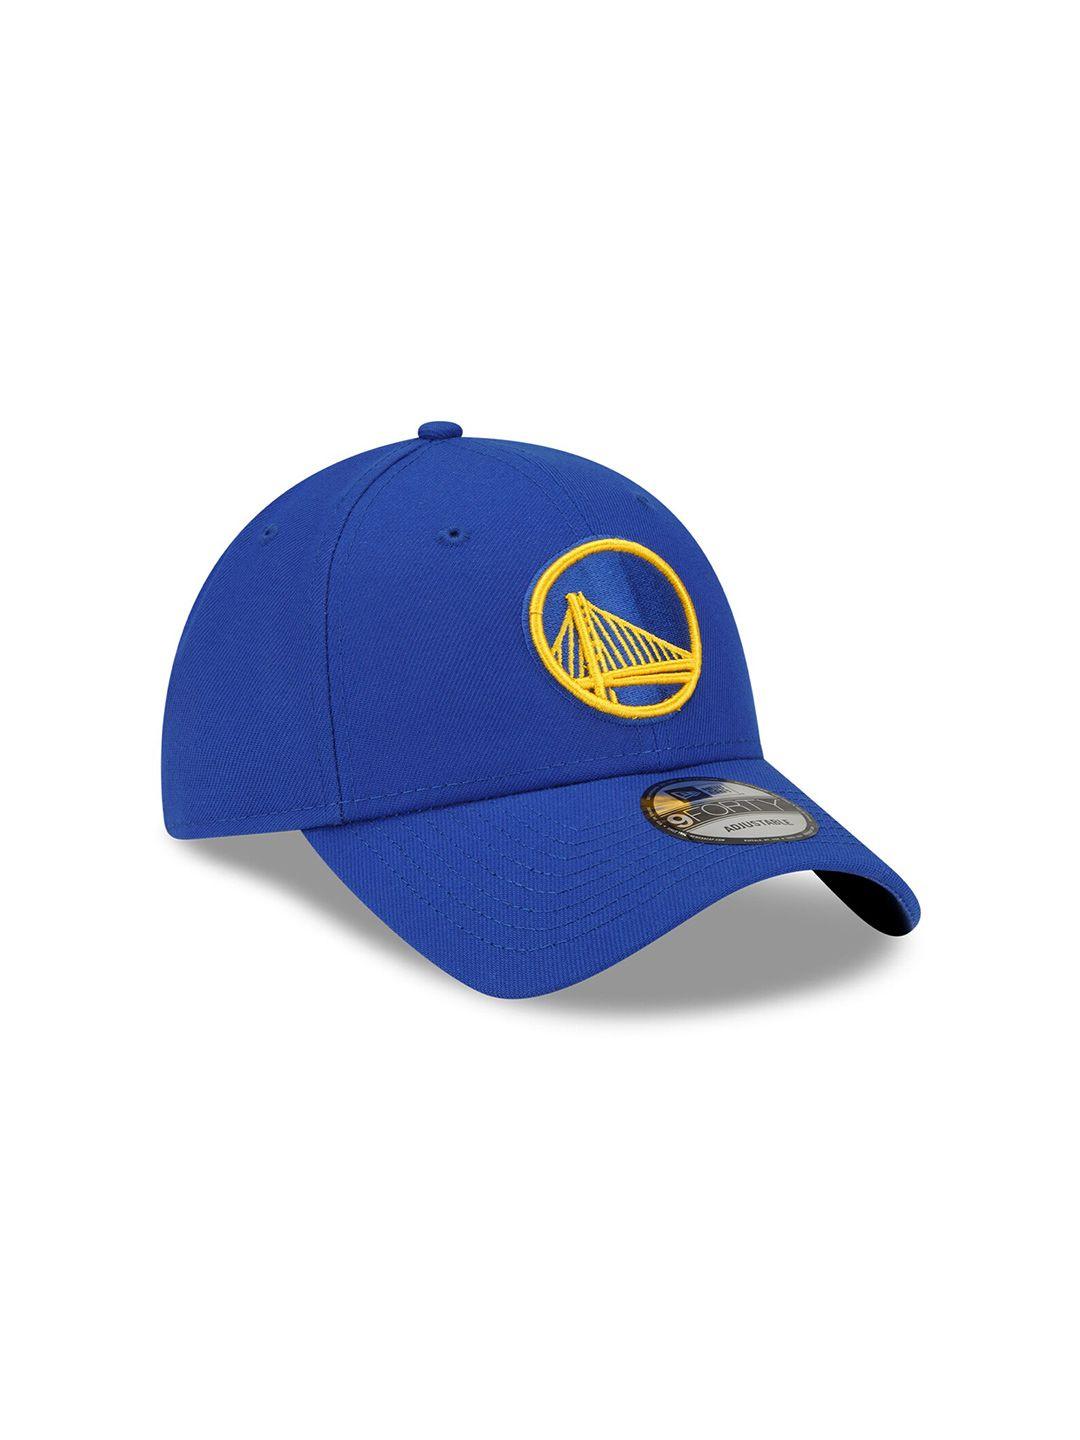 new era men blue & yellow embroidered baseball cap